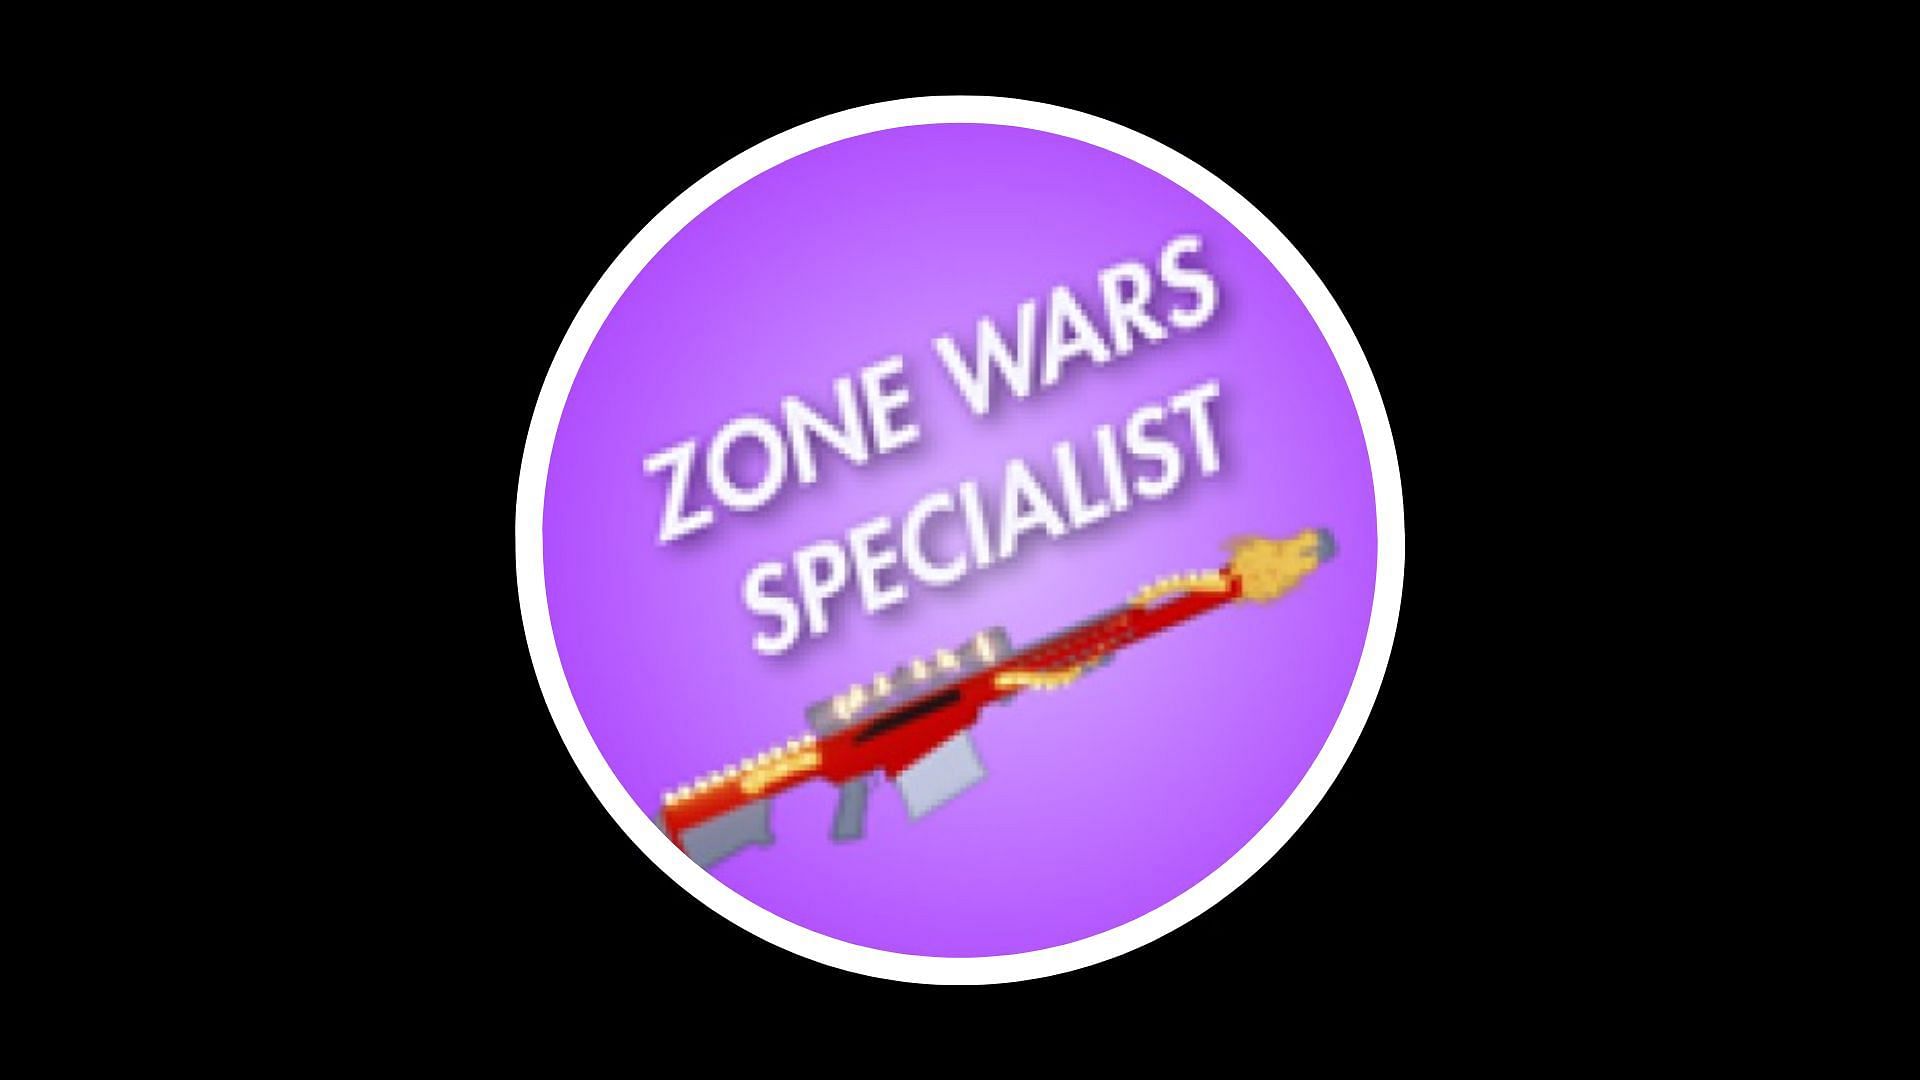 Zone Wars Specialist Gamepass (Image via Roblox Corporation)